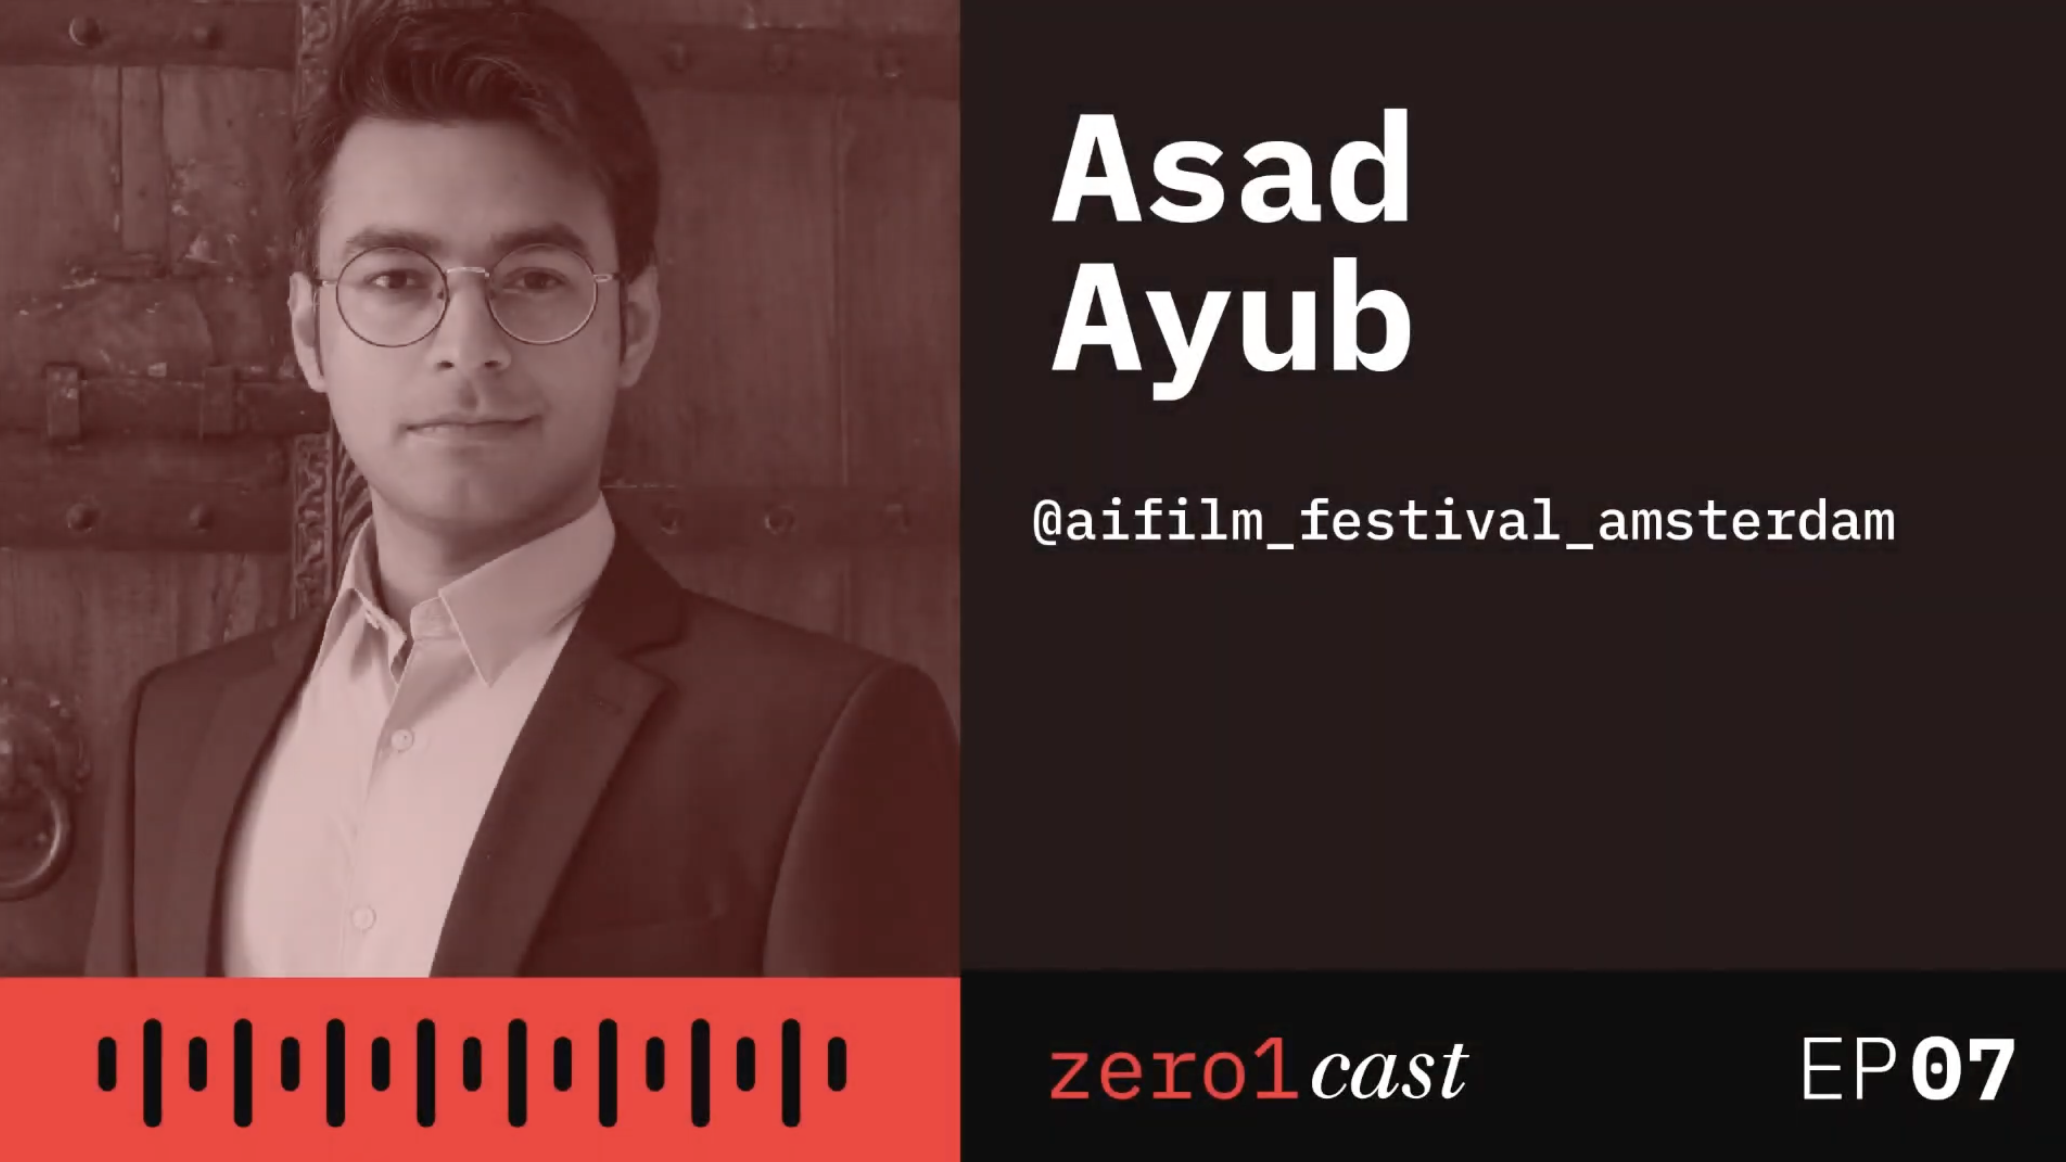 Asad Ayub – Amsterdam AI Film Festival, Creativity, Music and many more